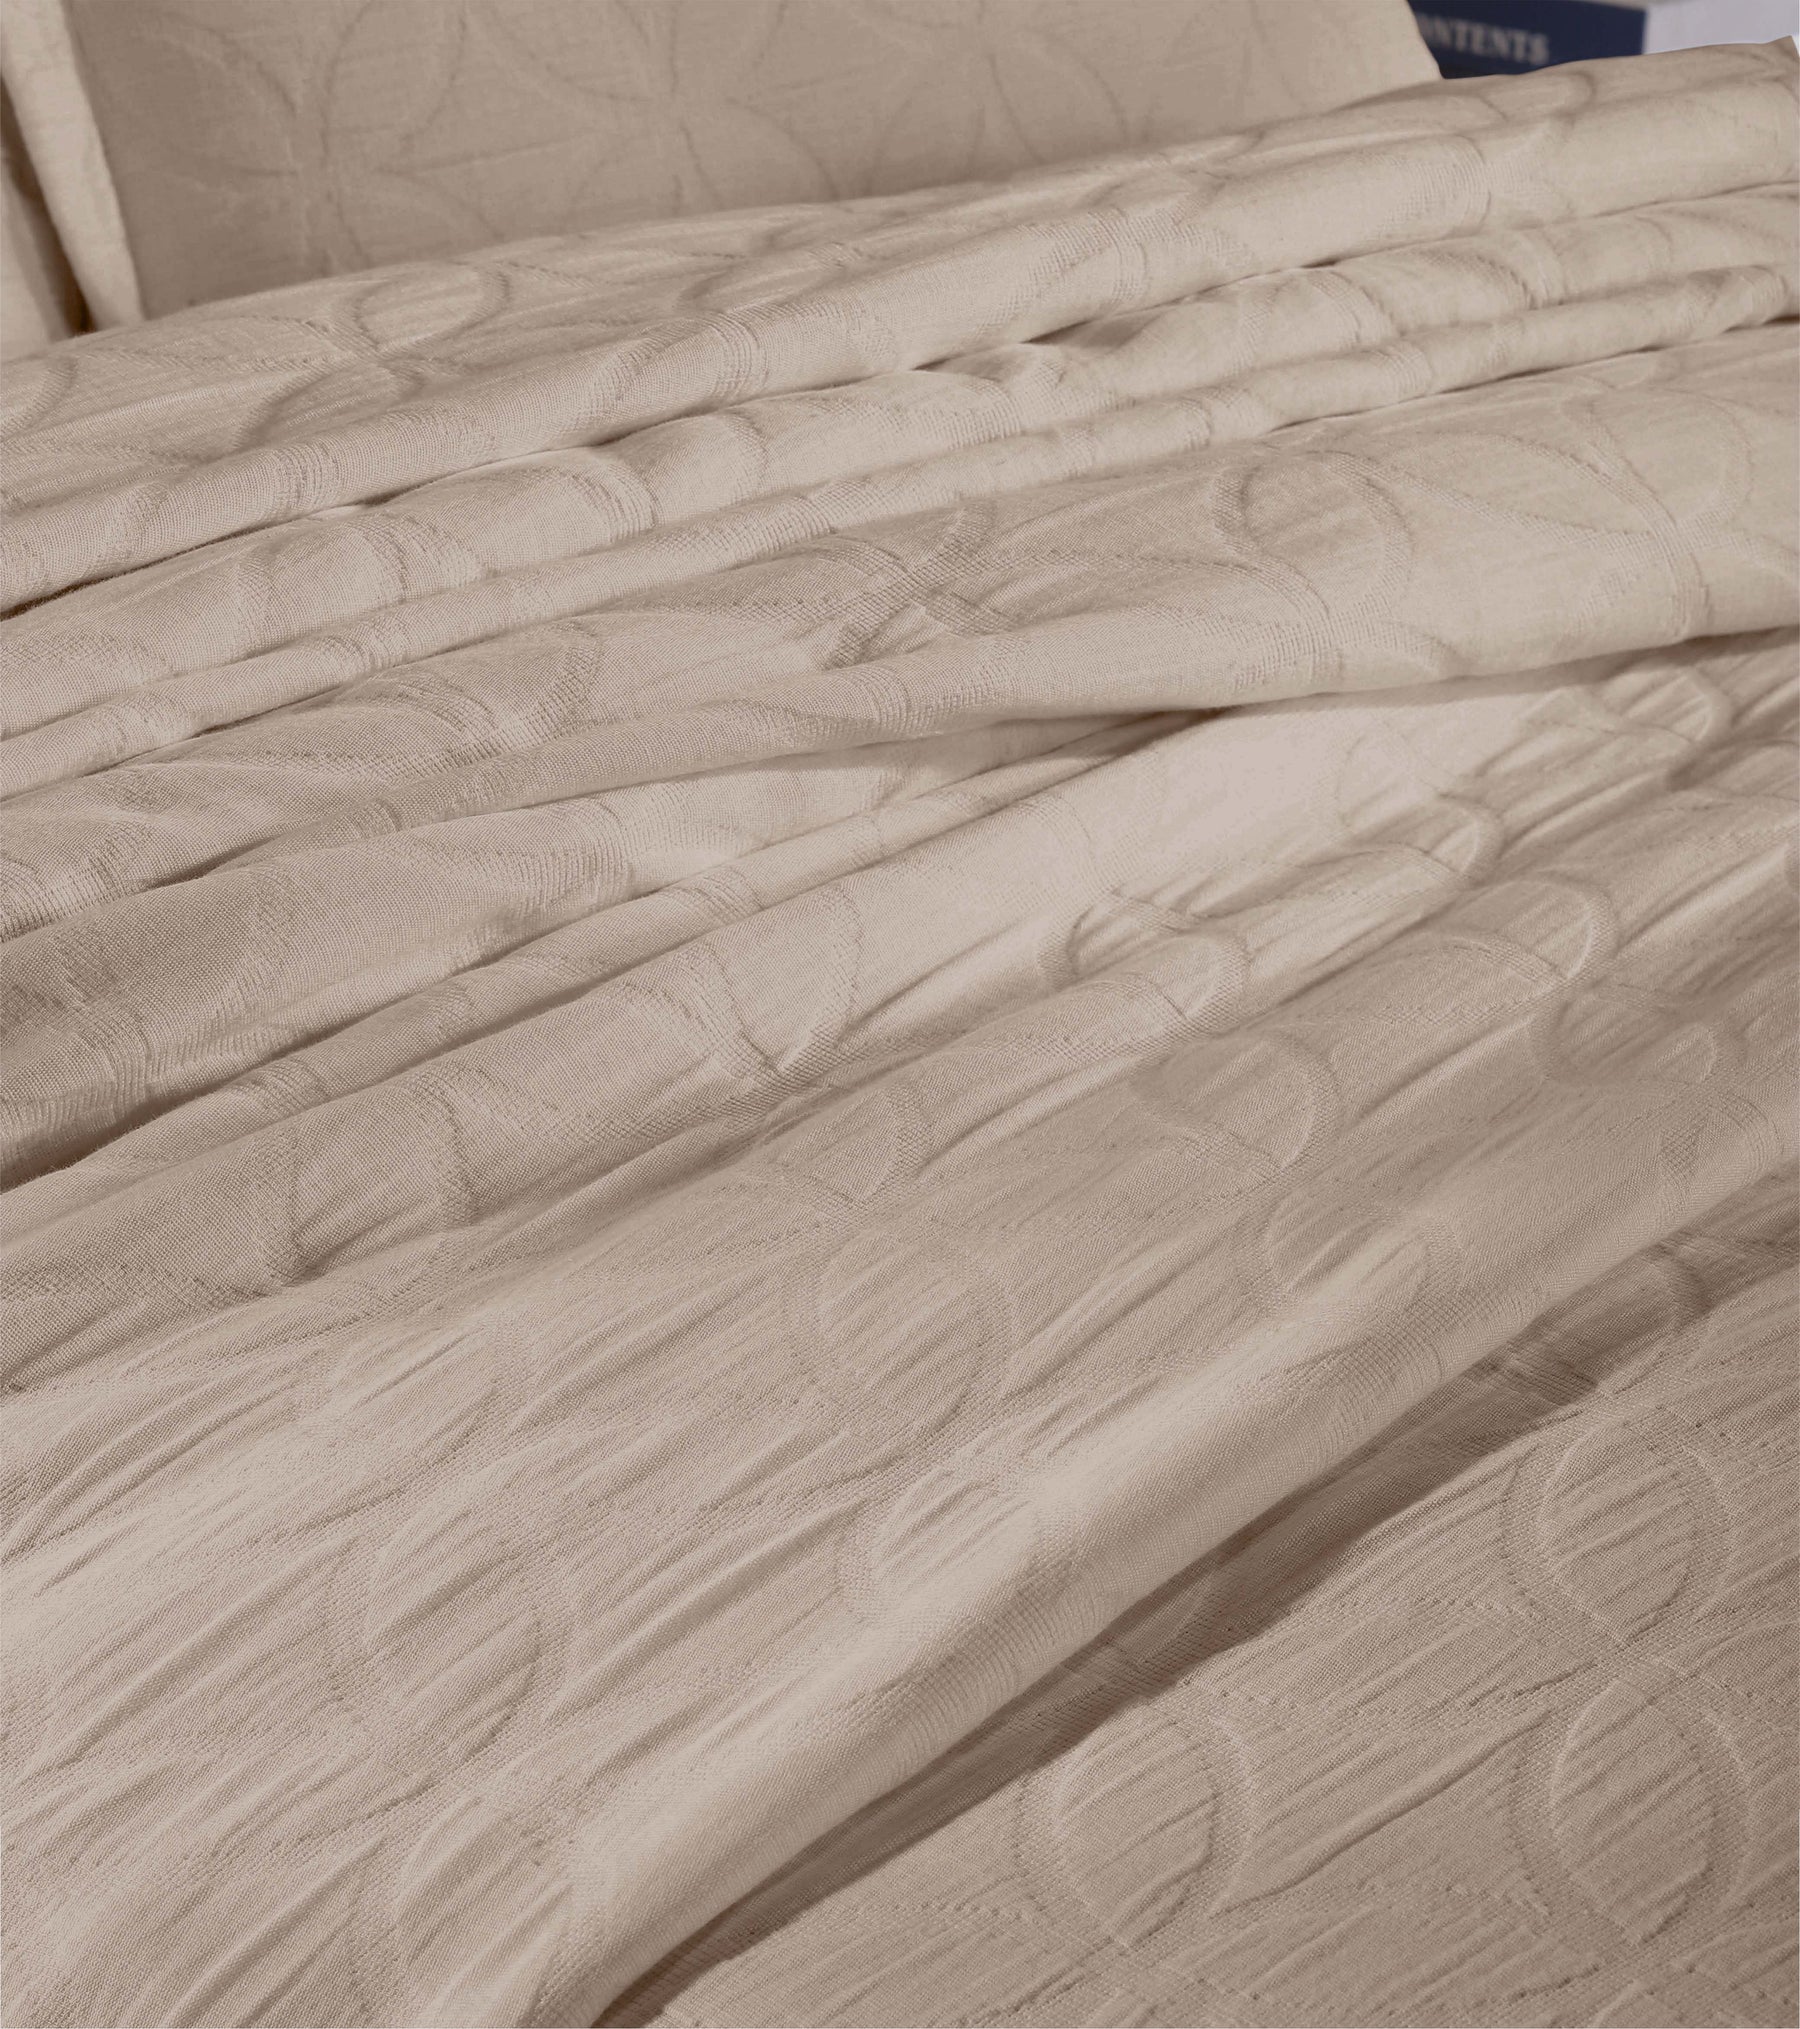 Serenity Cotton Matelasse Weave Jacquard Celtic Circle Bedspread Set - Linen